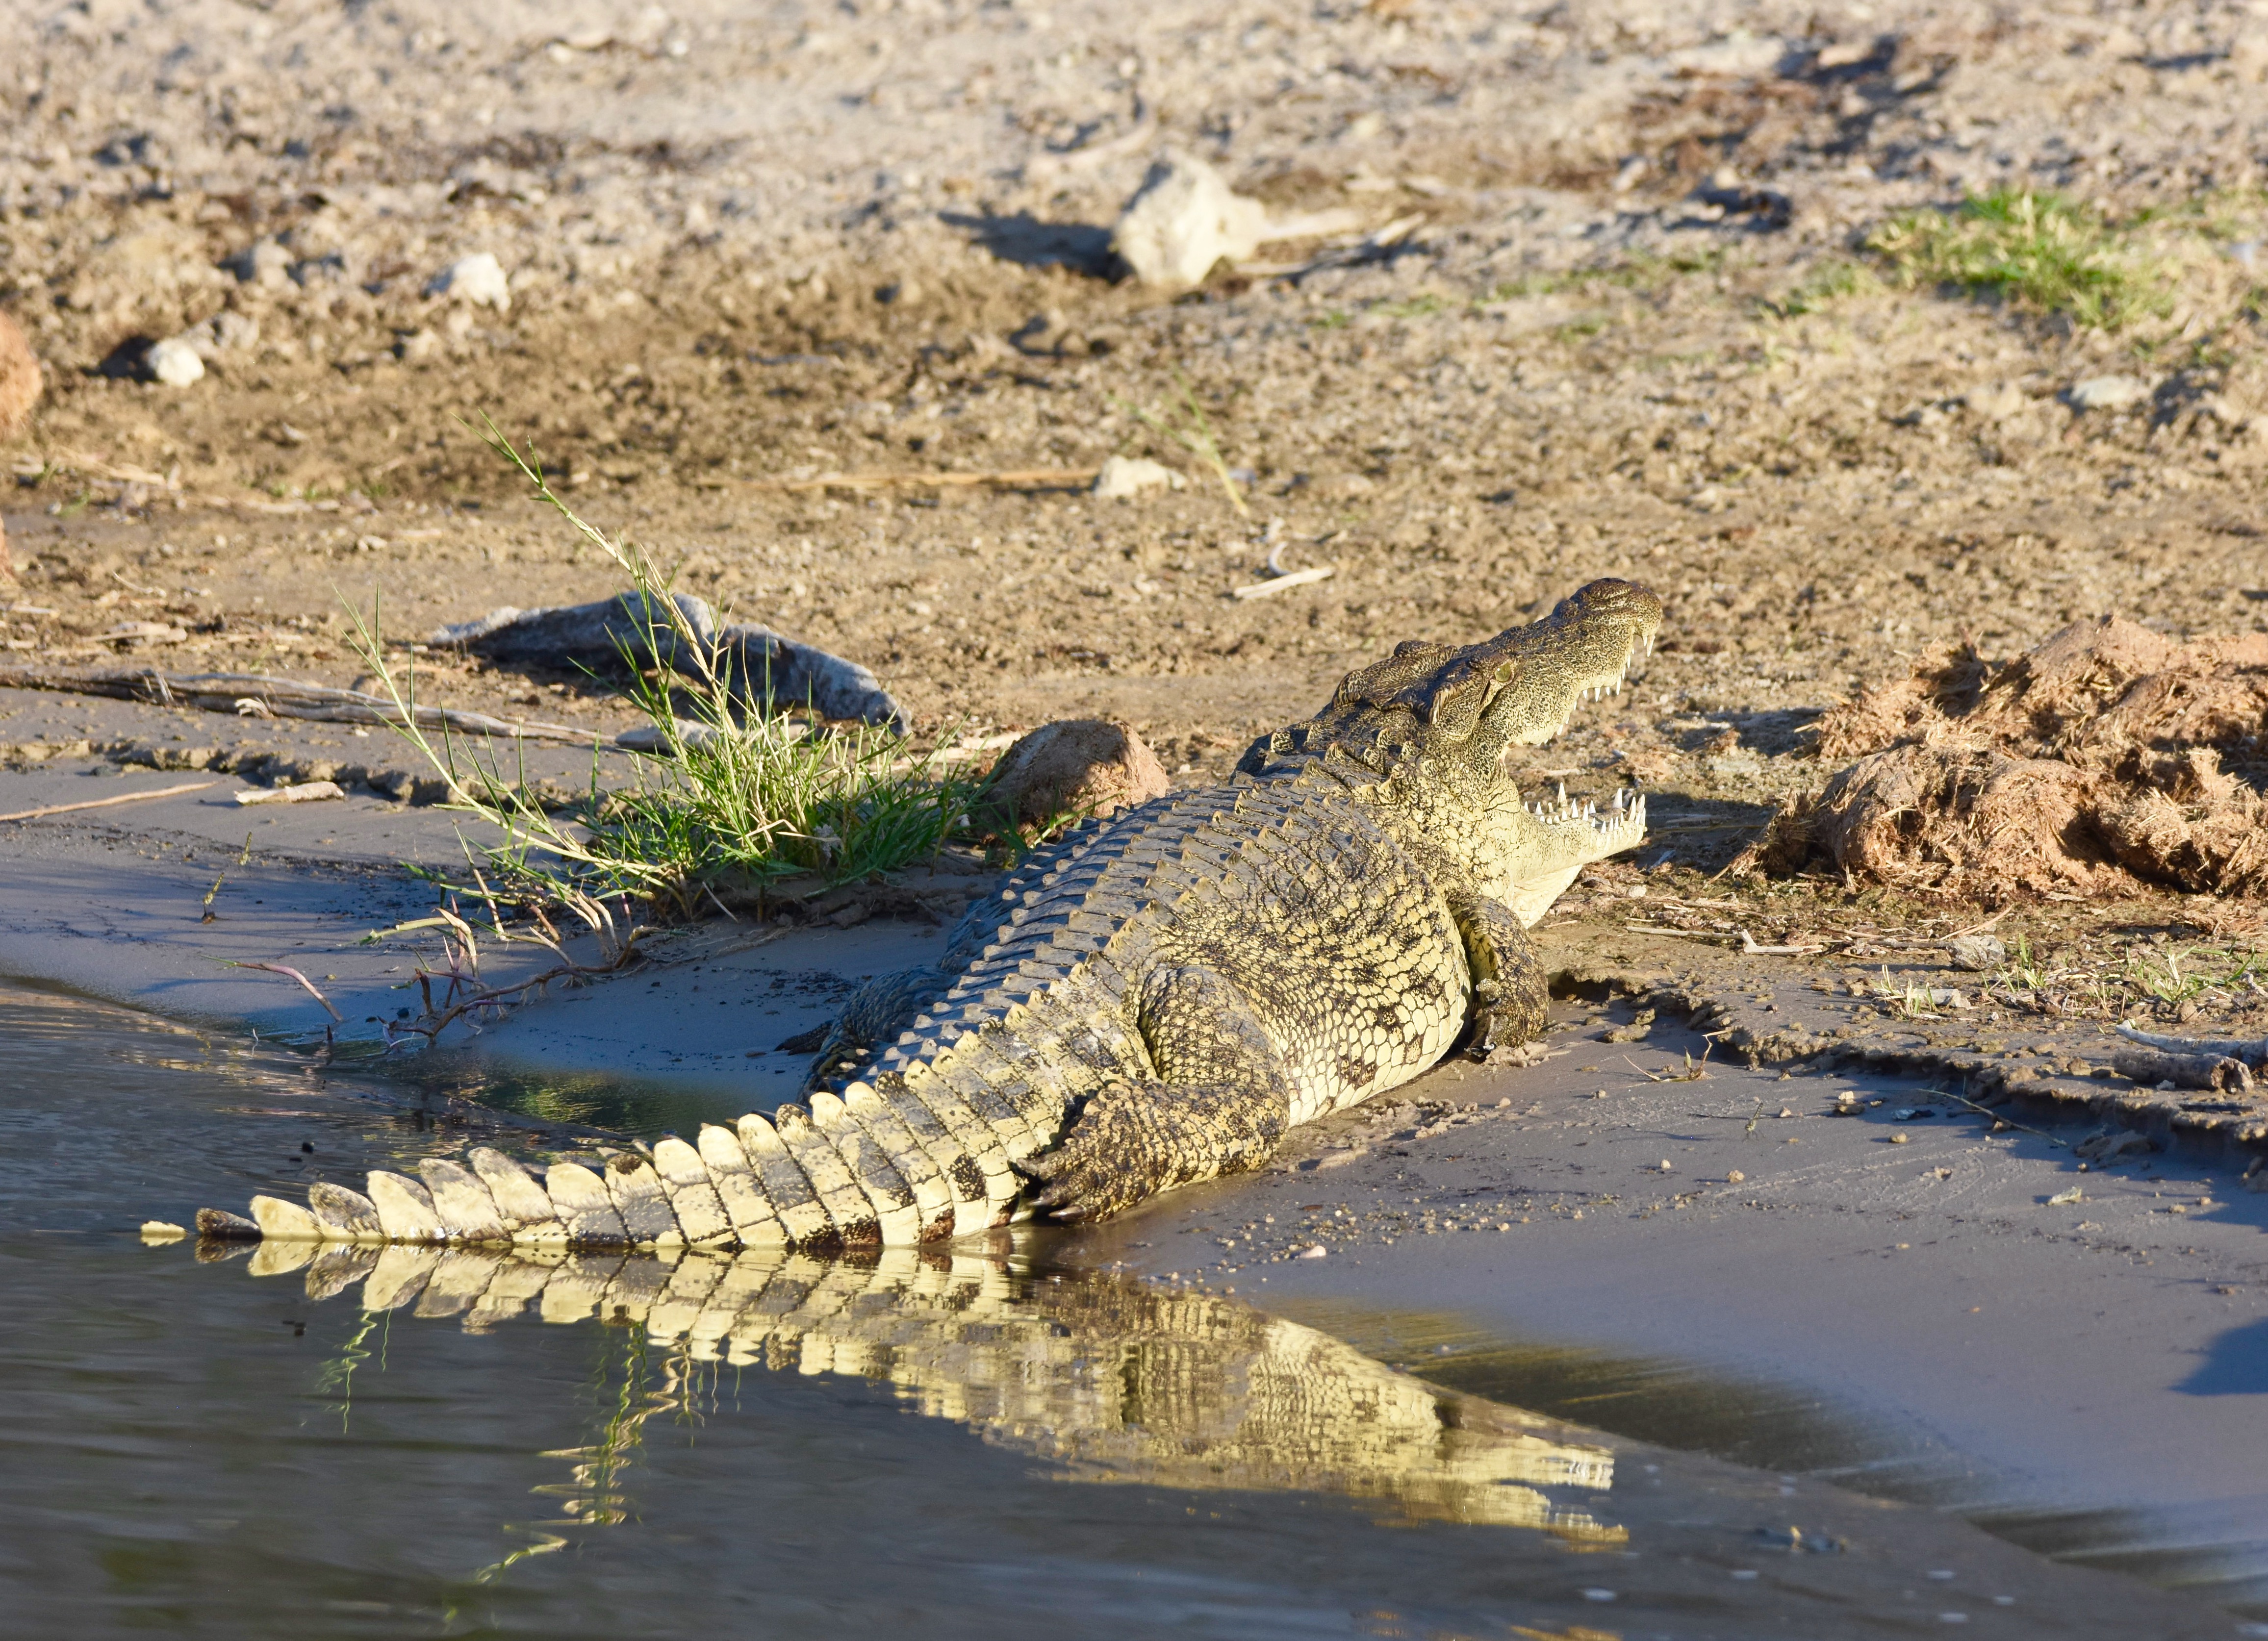 Crocodile on the Chobe River